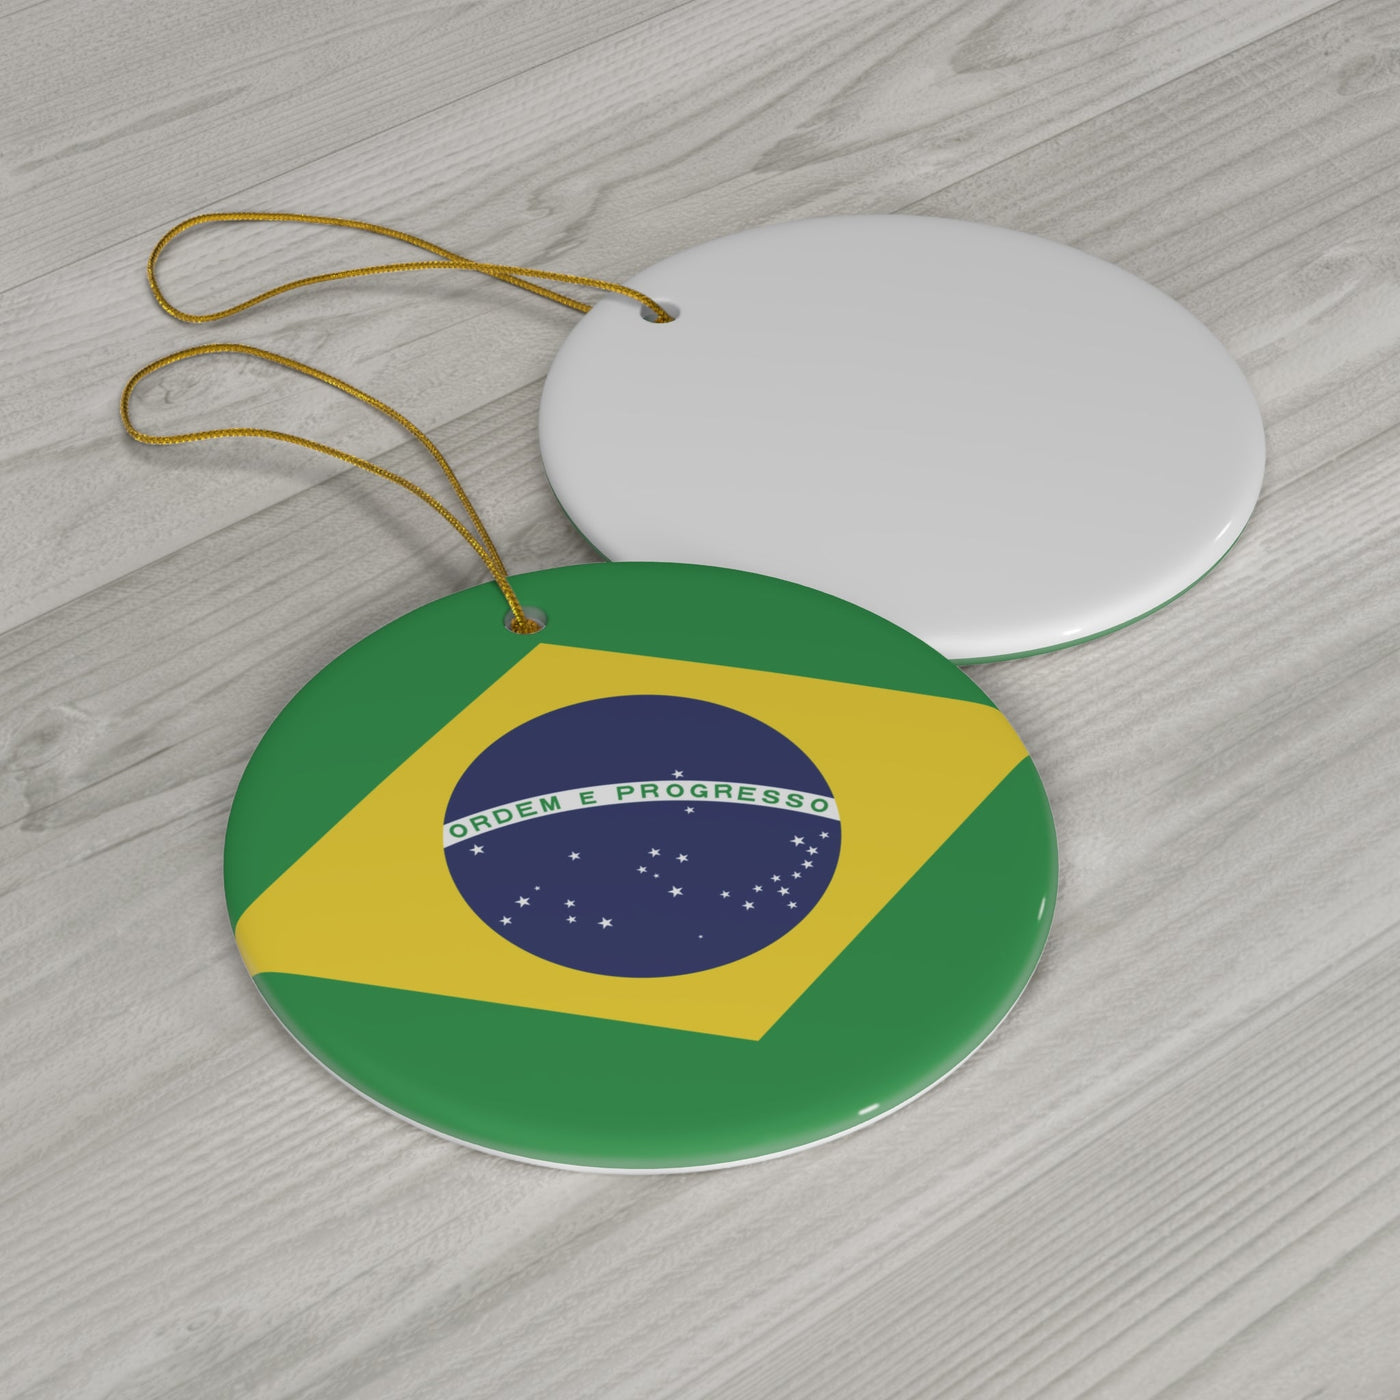 Brazil Ceramic Ornament - Ezra's Clothing